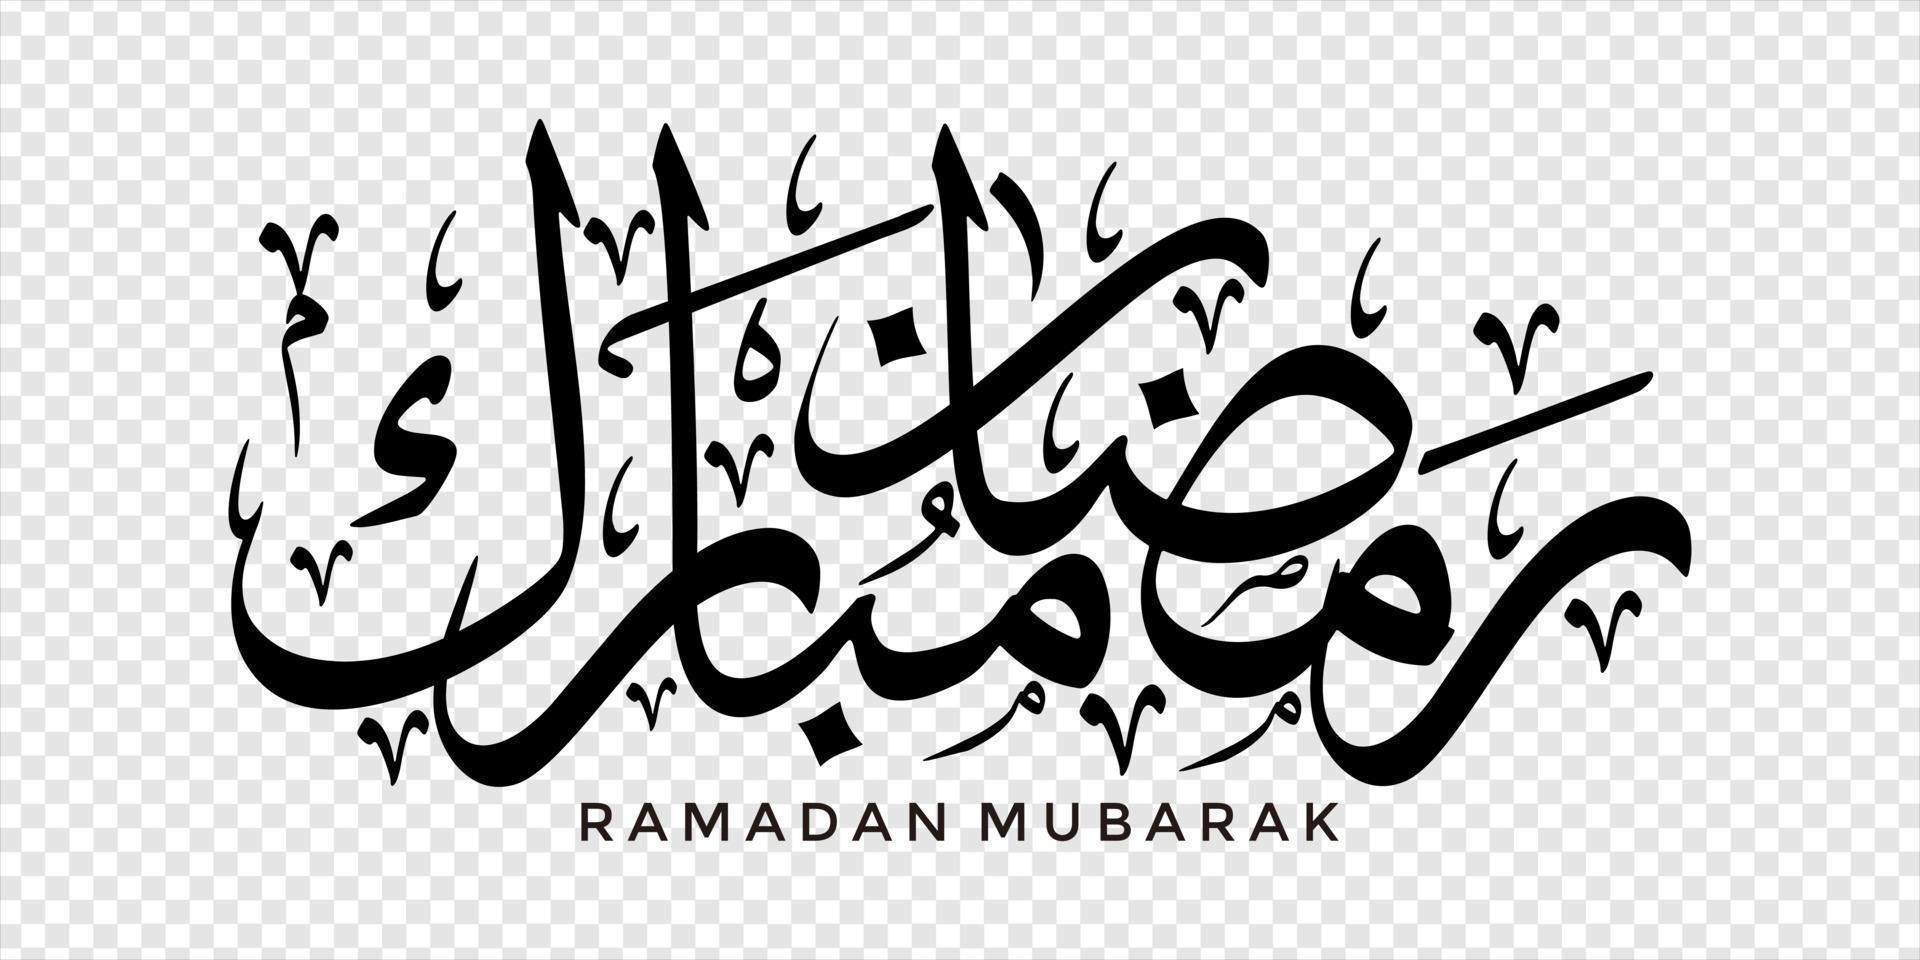 Ramadan Mubarak in Arabic calligraphy, design element on a transparent background. vector illustration